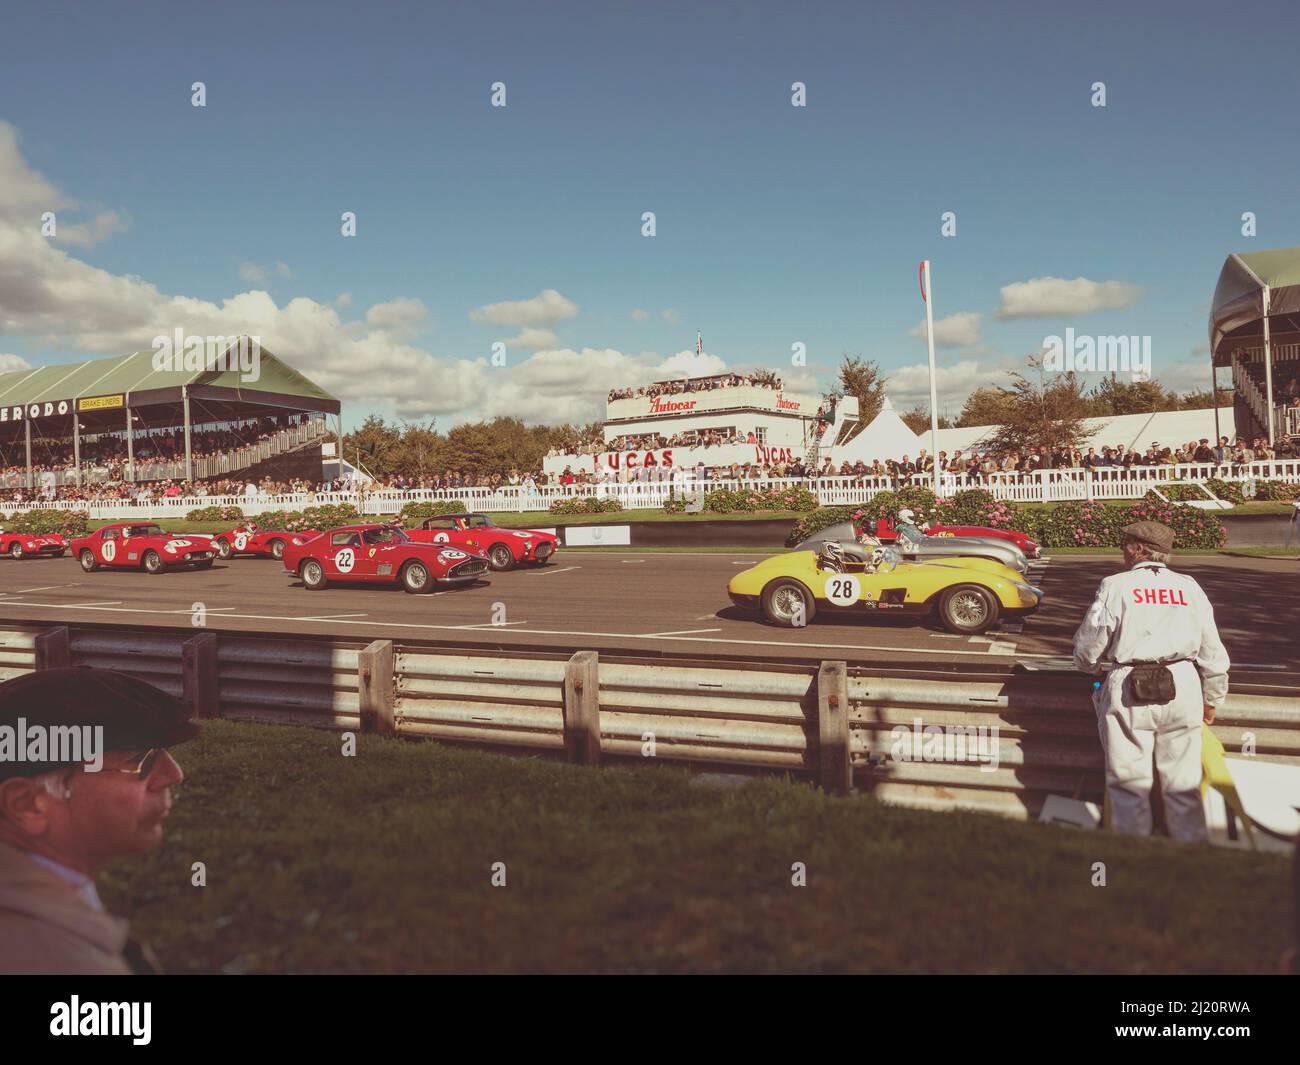 2015 Revival de Goodwood en el circuito de carreras de Goodwood West Sussex UK Foto de stock